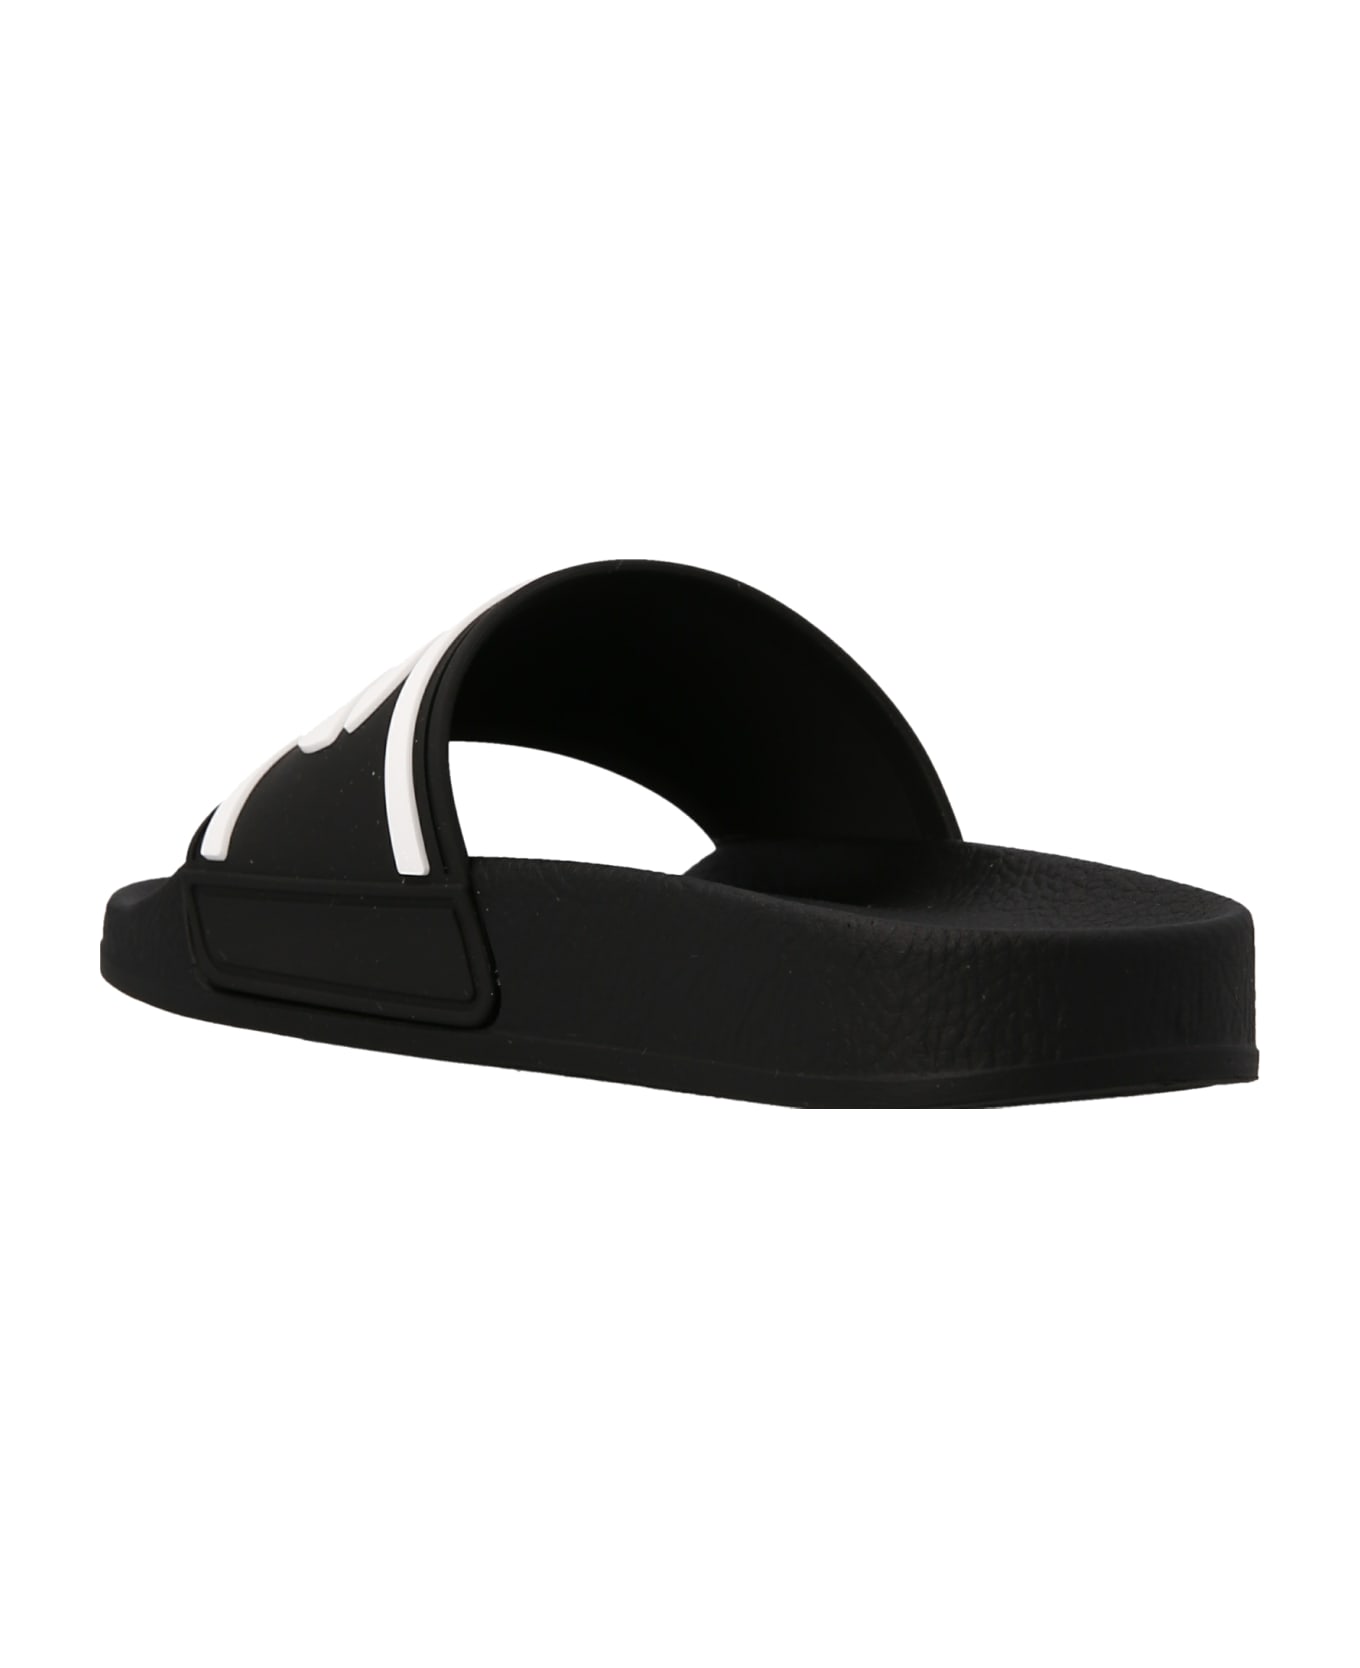 Dolce & Gabbana Logo Slides - Black